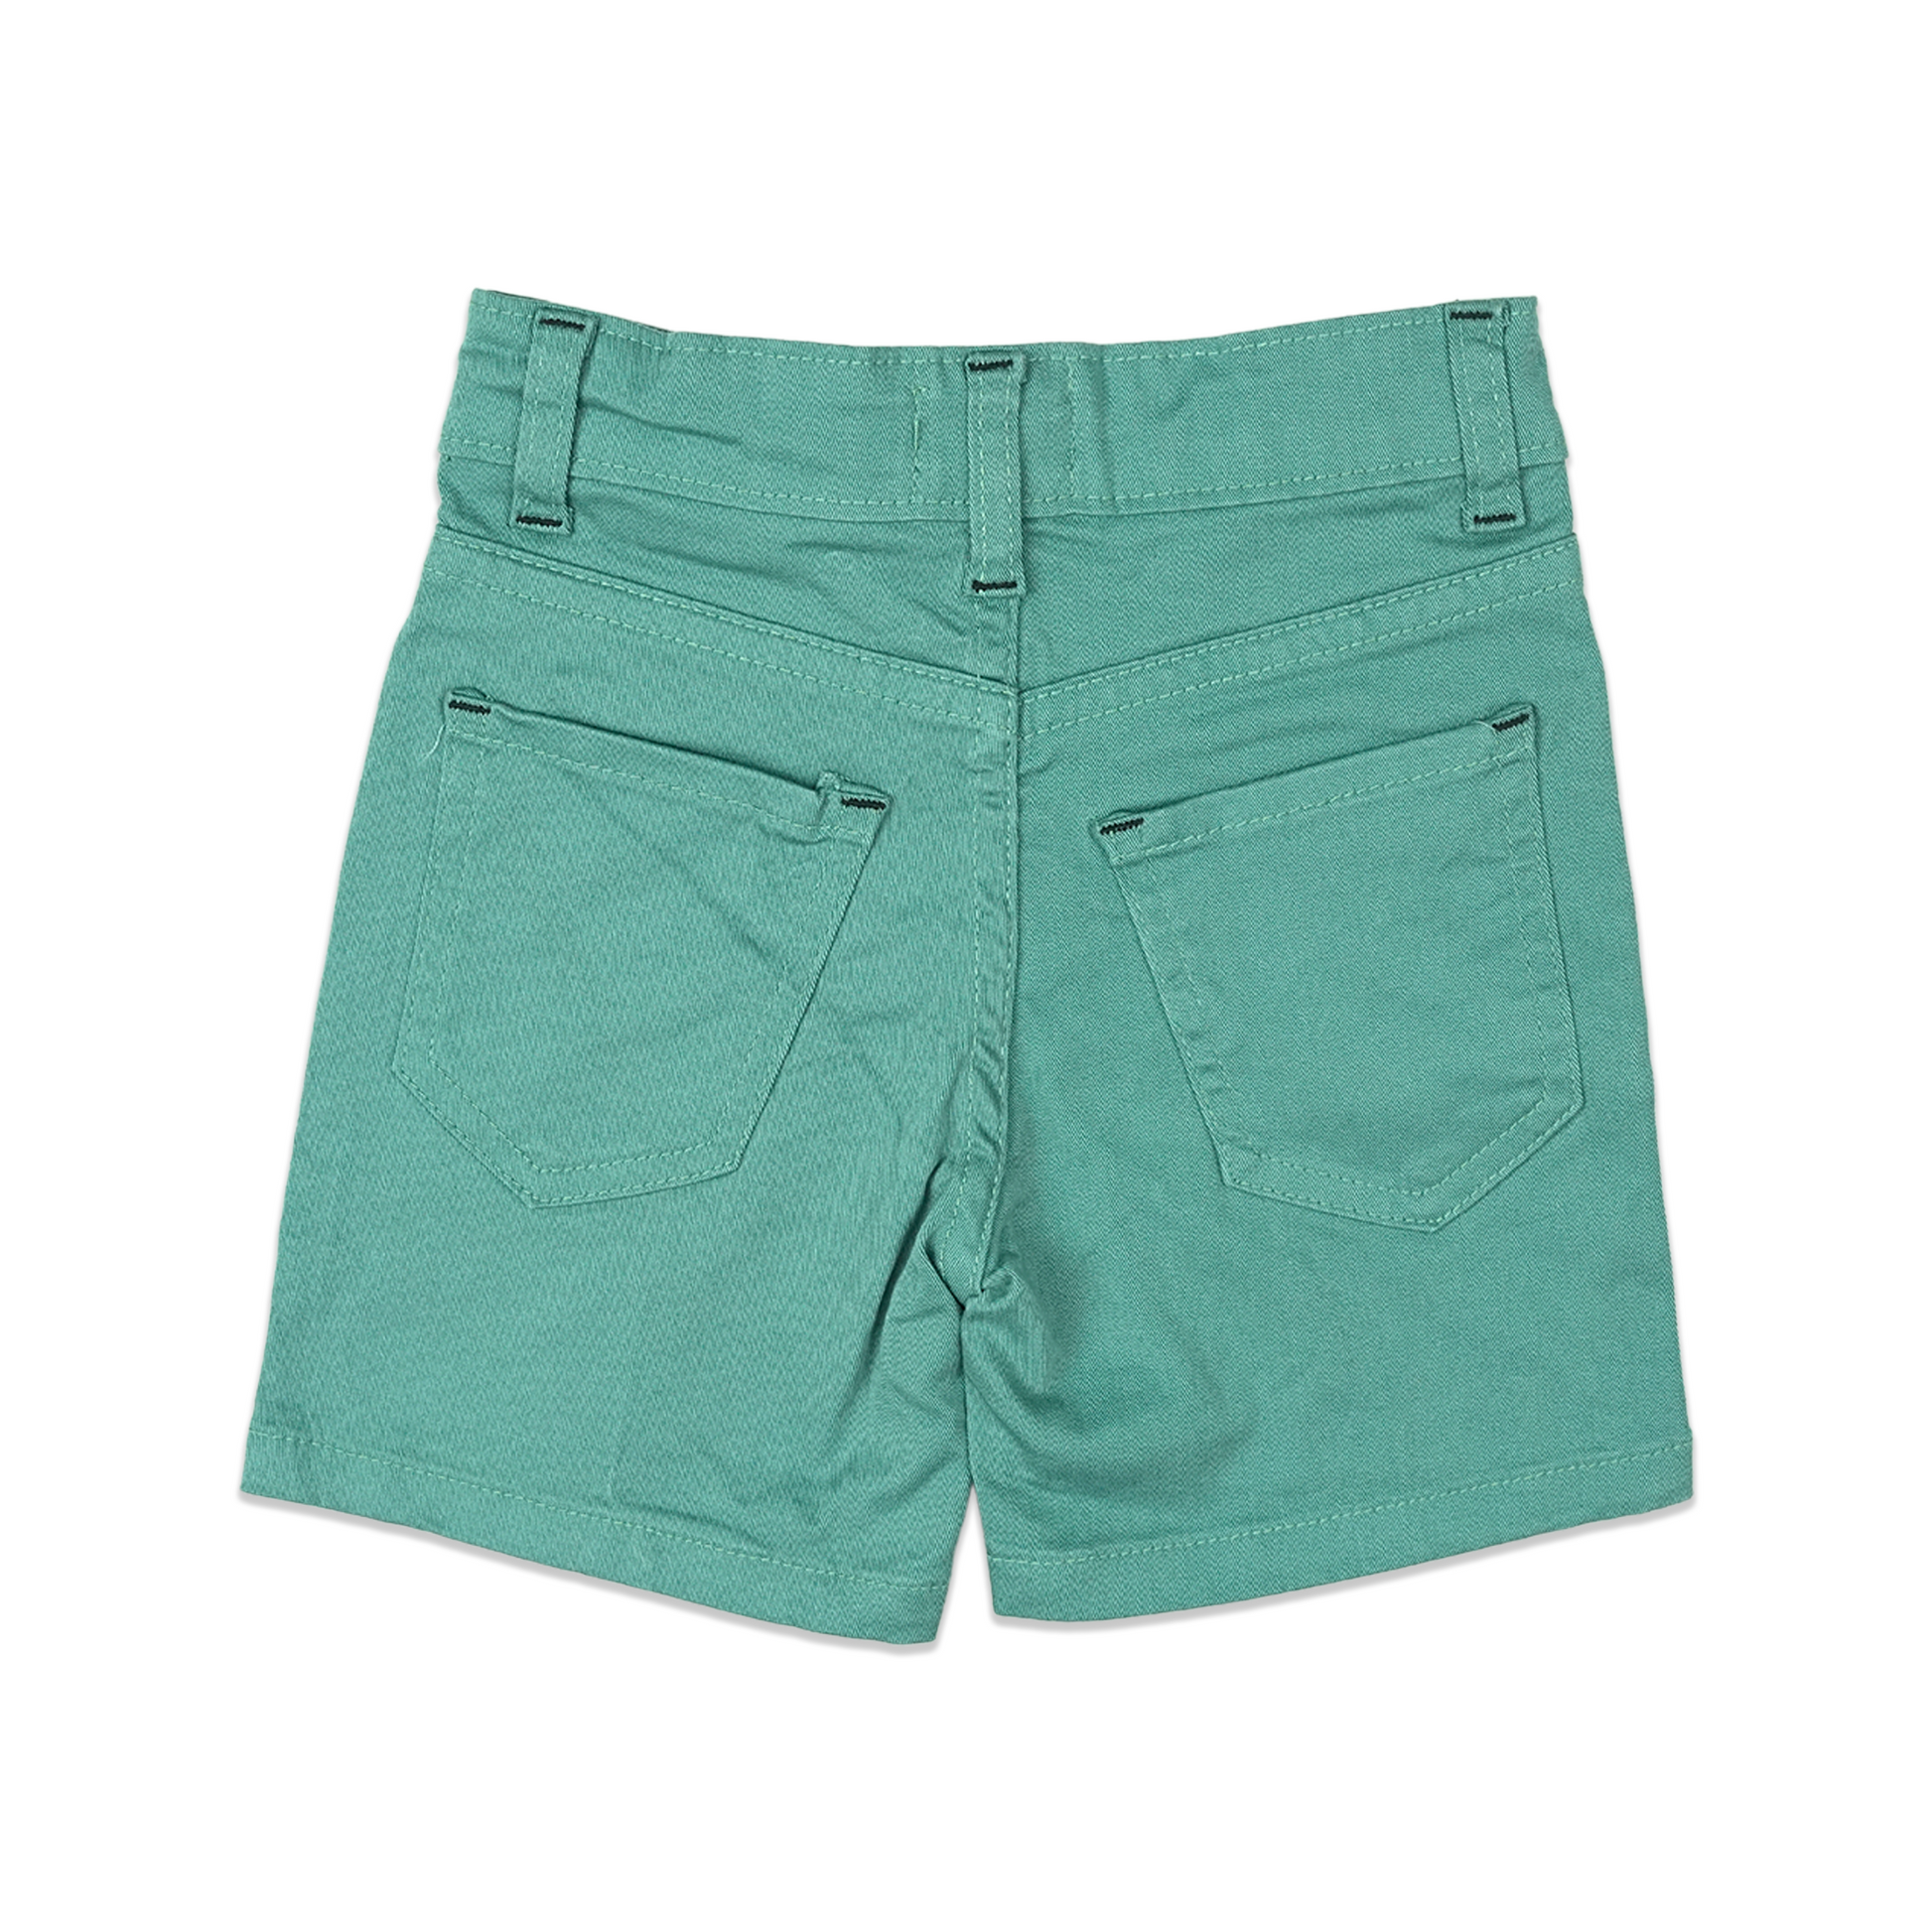 Sky Green Shorts for Boys - Miniwears